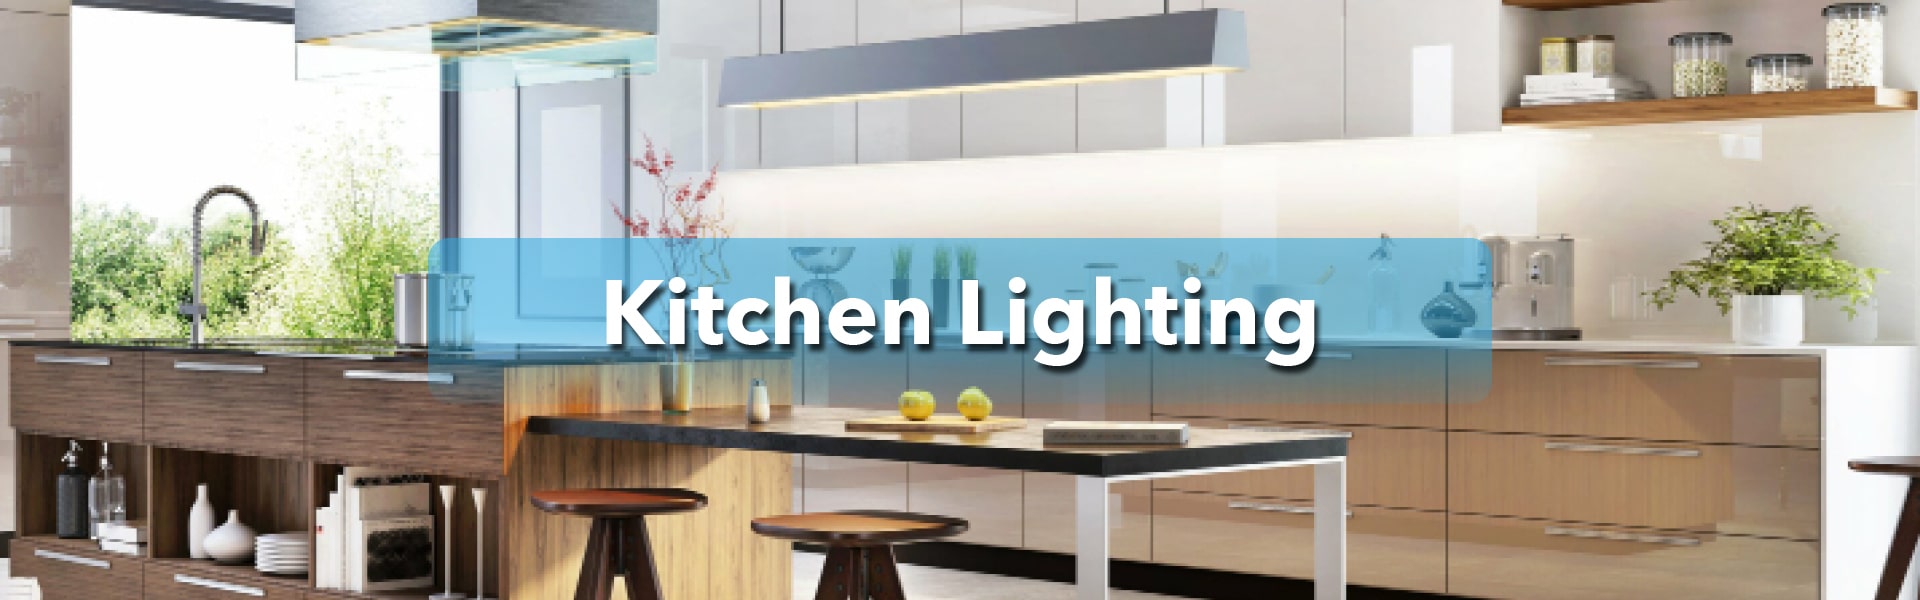 Kitchen lighting range at Lightsave home store